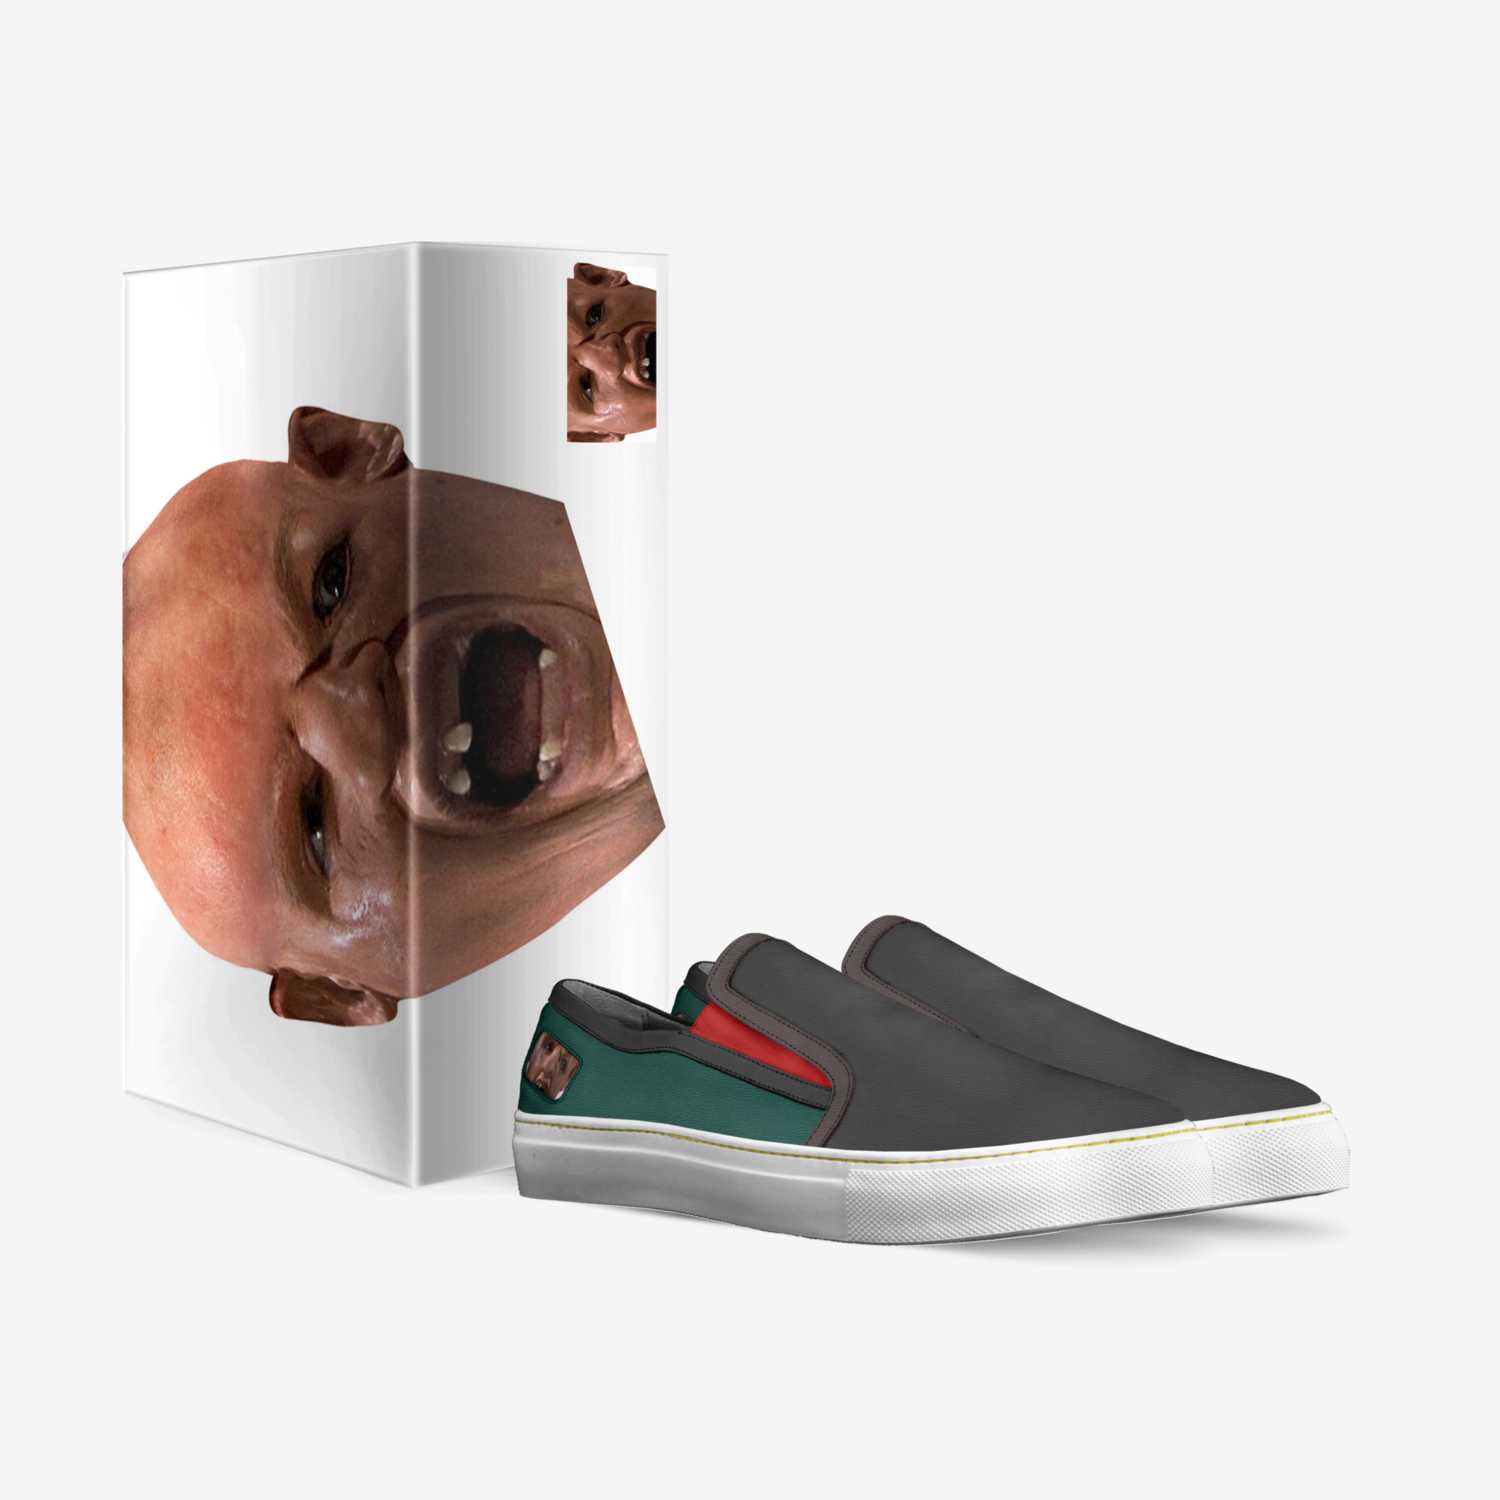 $loth$kin custom made in Italy shoes by Julian Mccaul | Box view